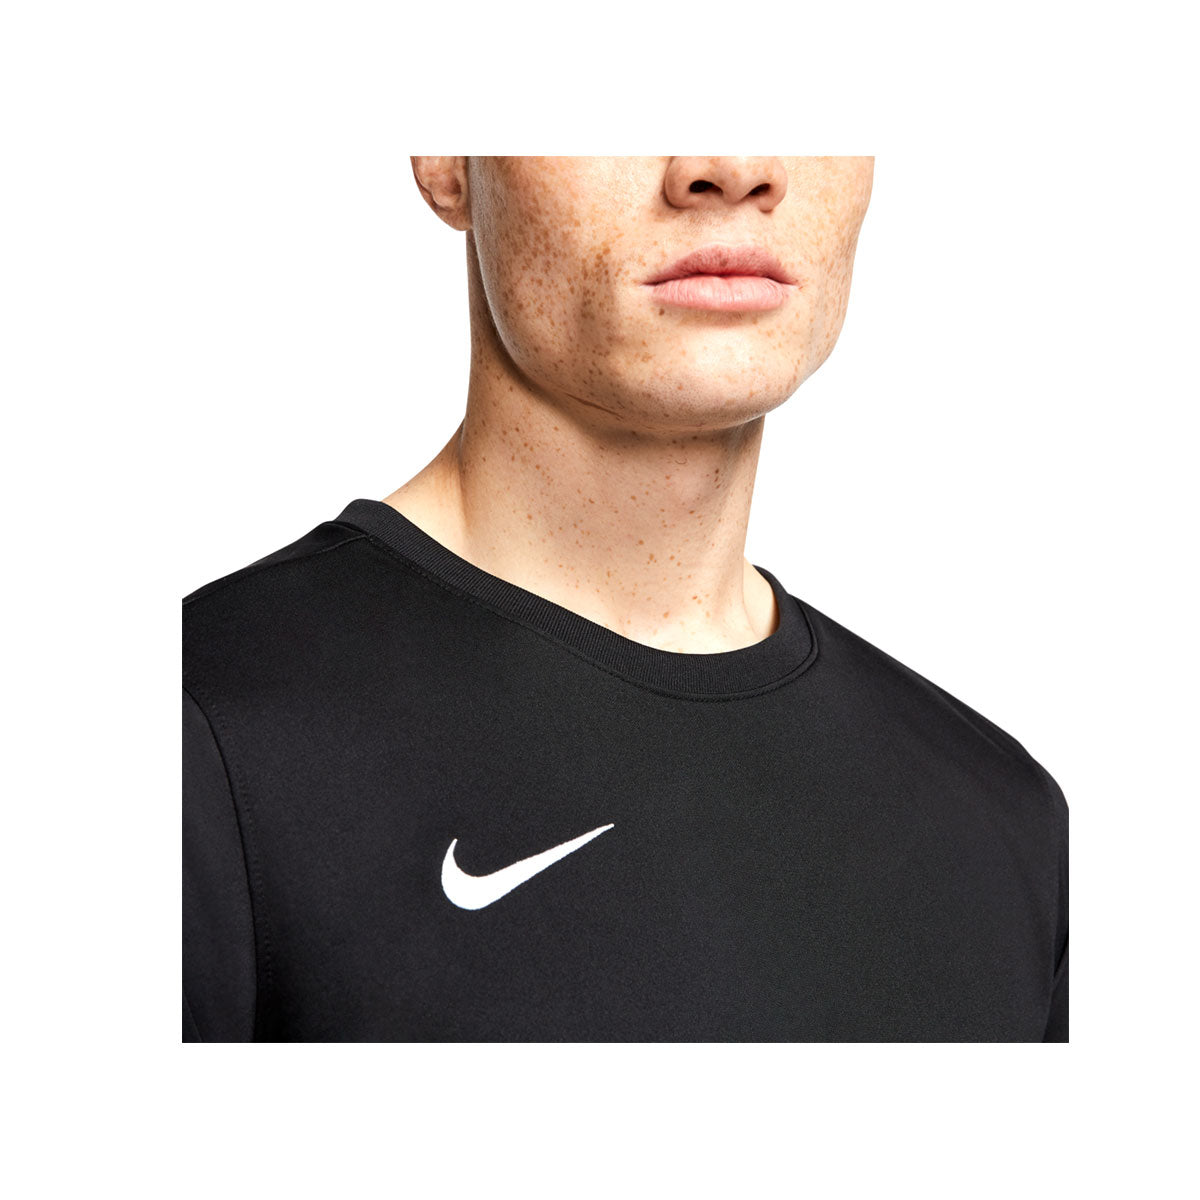 Nike Men's Dry Park VII Training Top Shirts